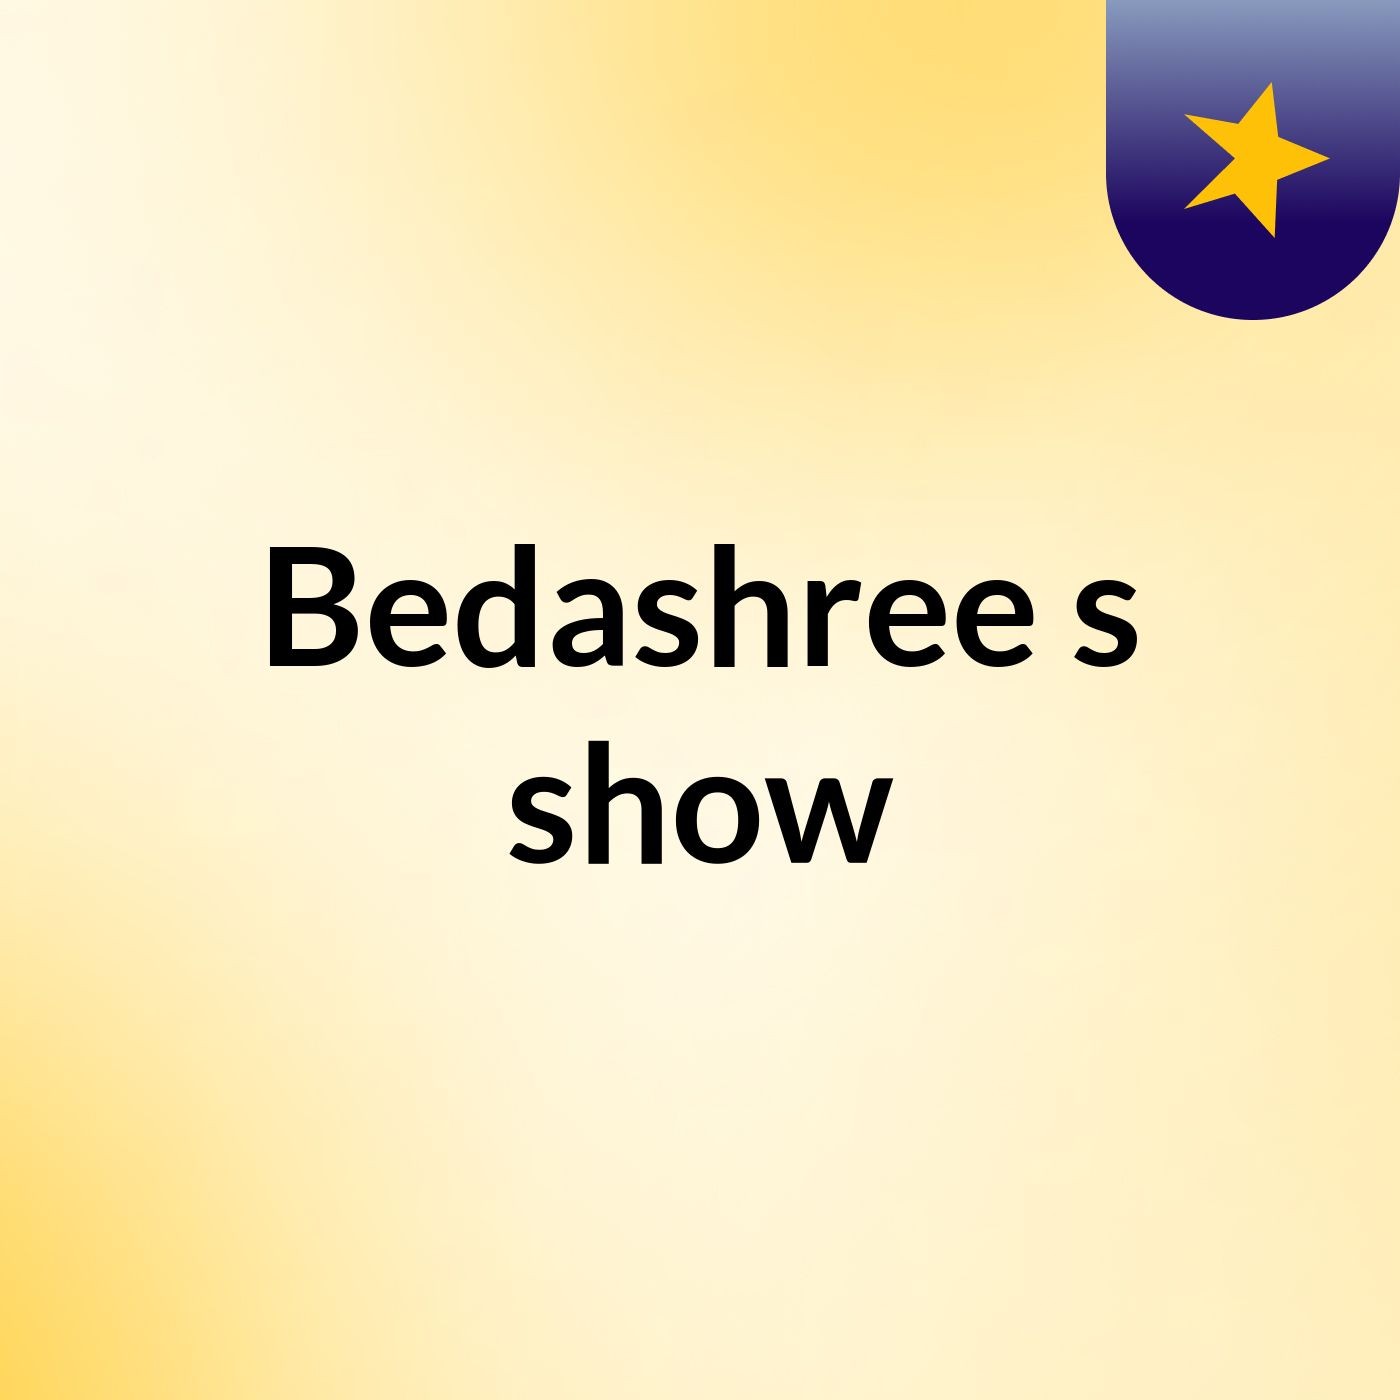 Bedashree's show